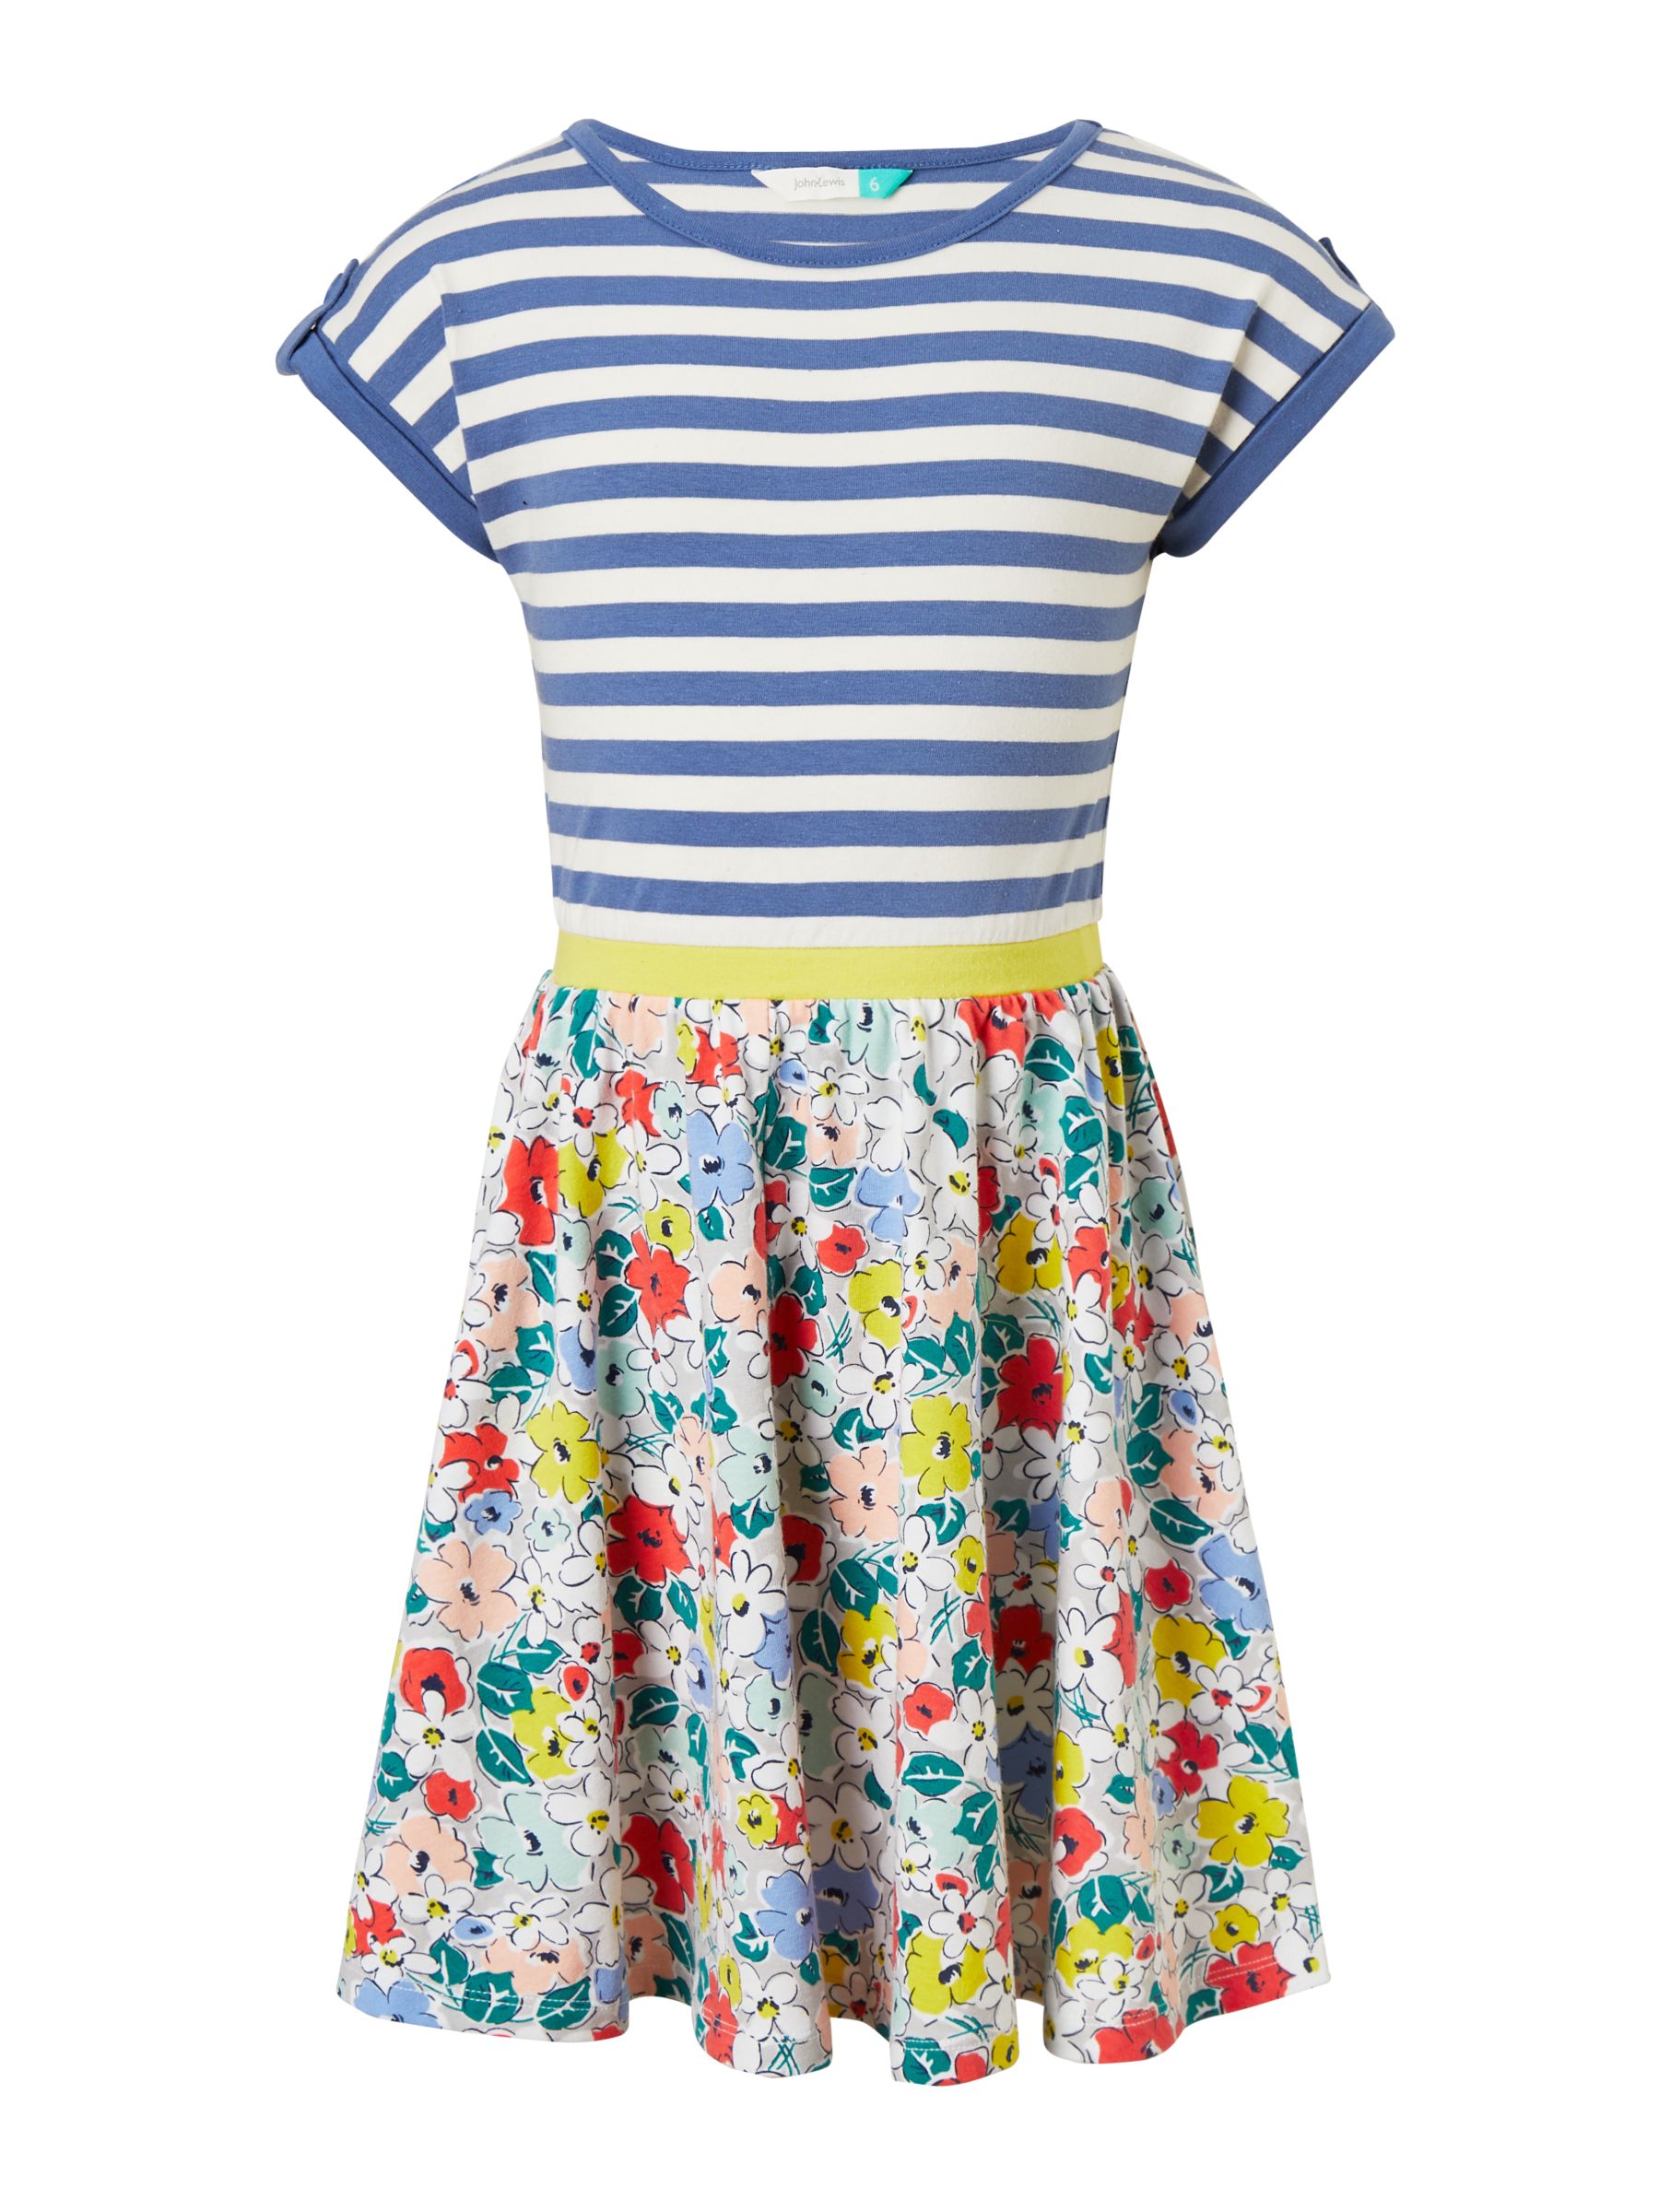 John Lewis & Partners Girls' Floral Stripe Dress, Blue